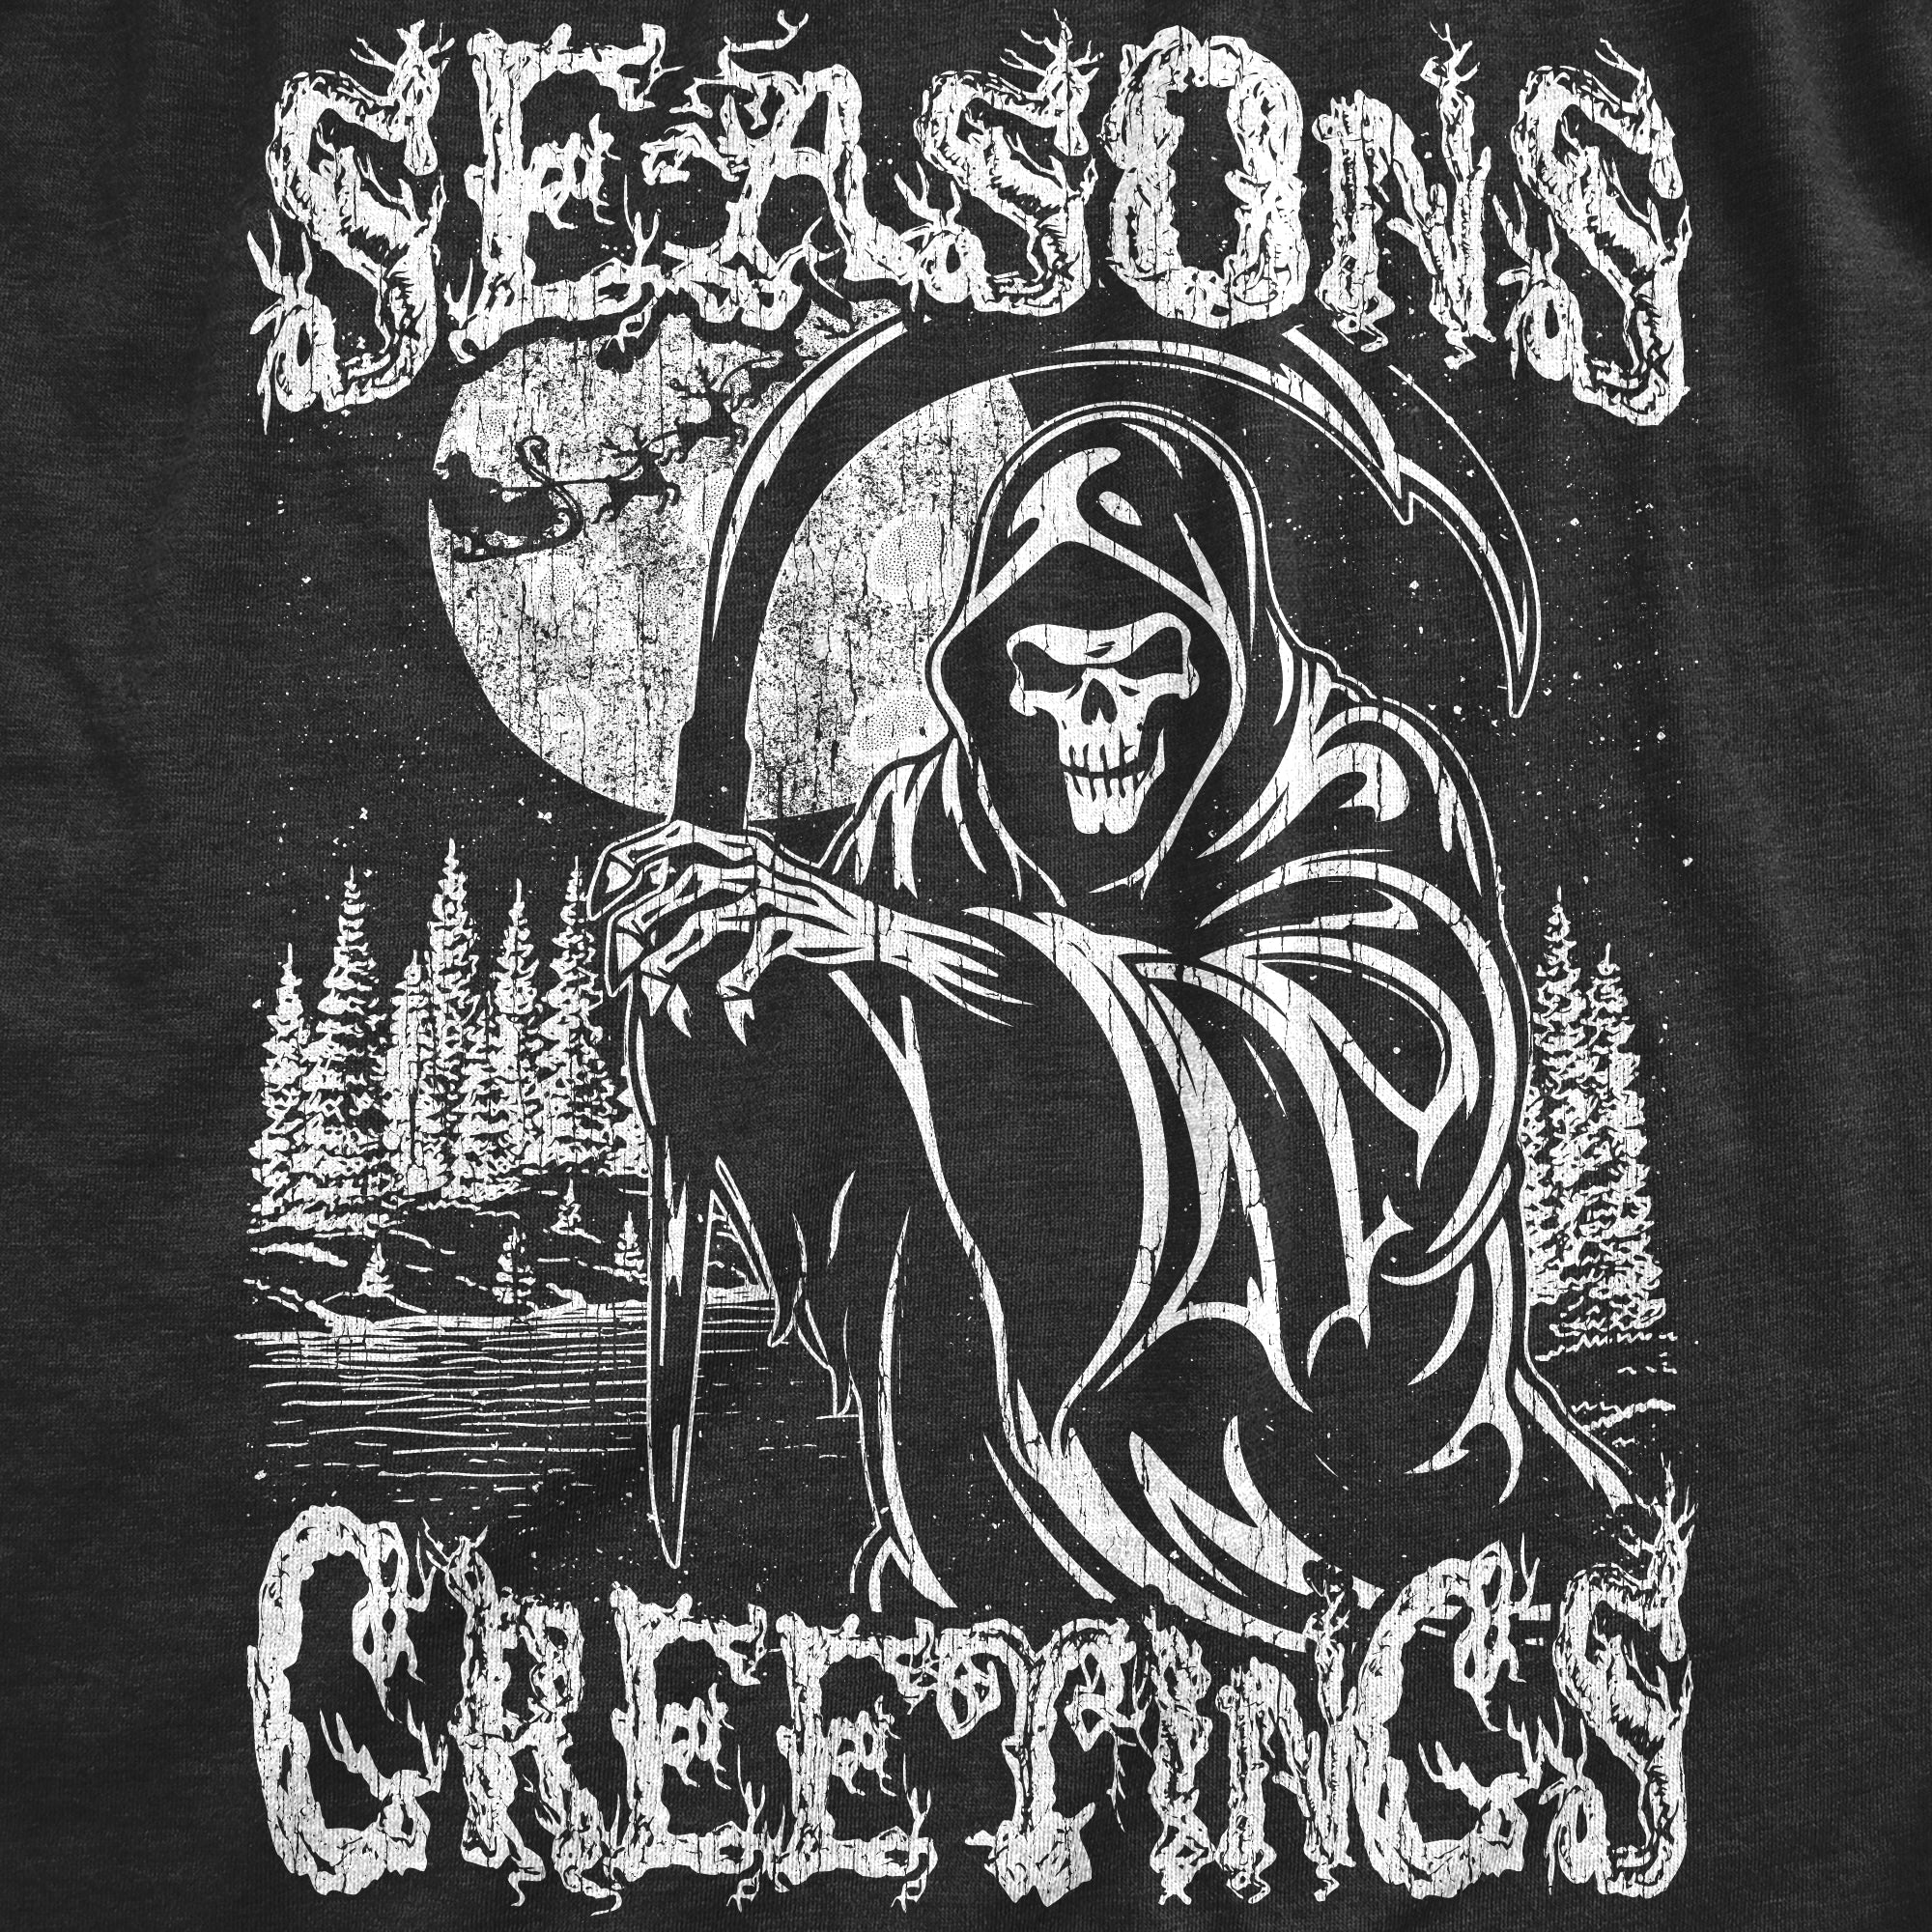 Funny Heather Black - GREETINGS Seasons Greetings Reaper Womens T Shirt Nerdy Christmas sarcastic Tee